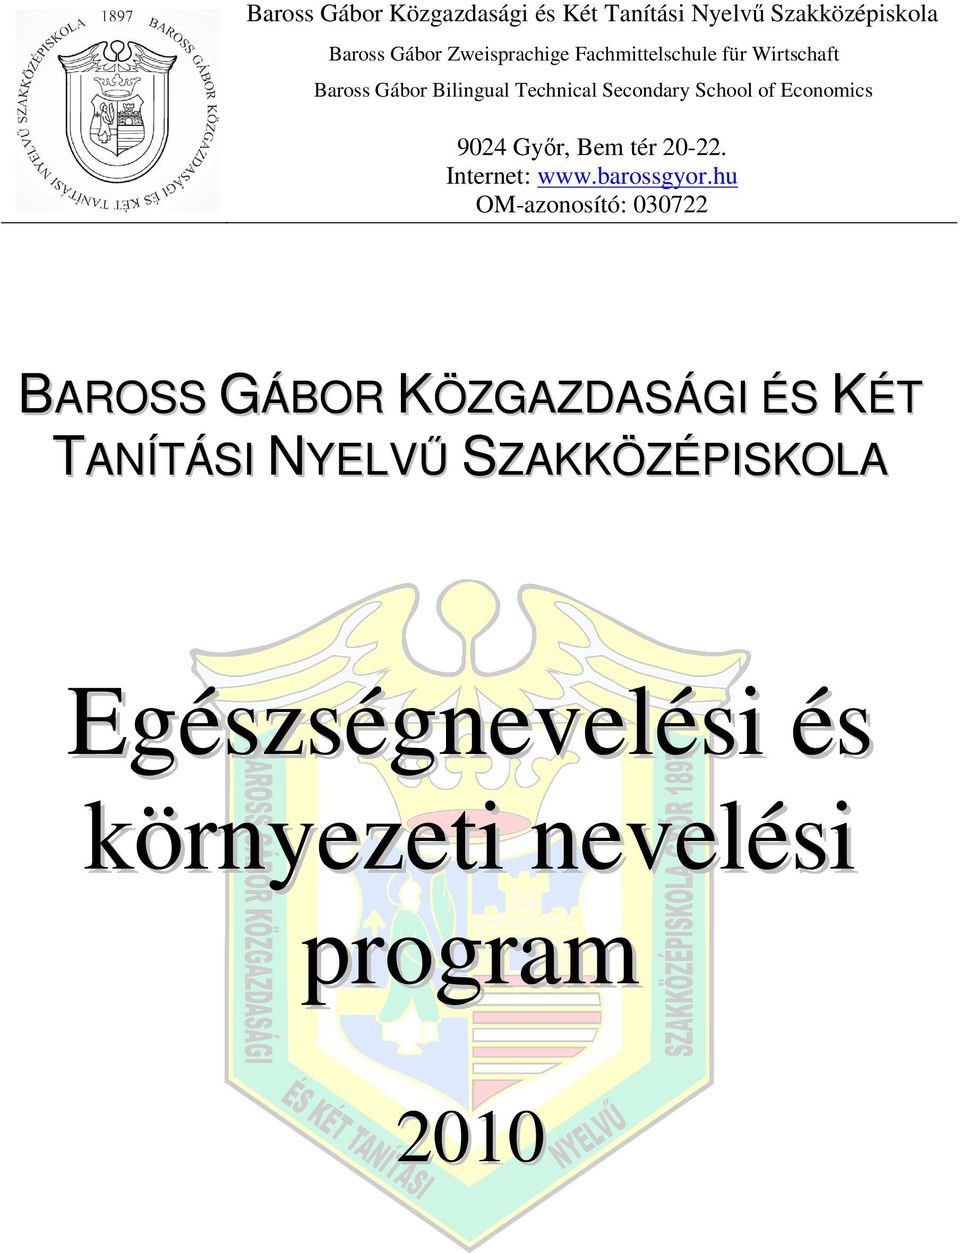 9024 Győr, Bem tér 20-22. Internet: www.barossgyor.